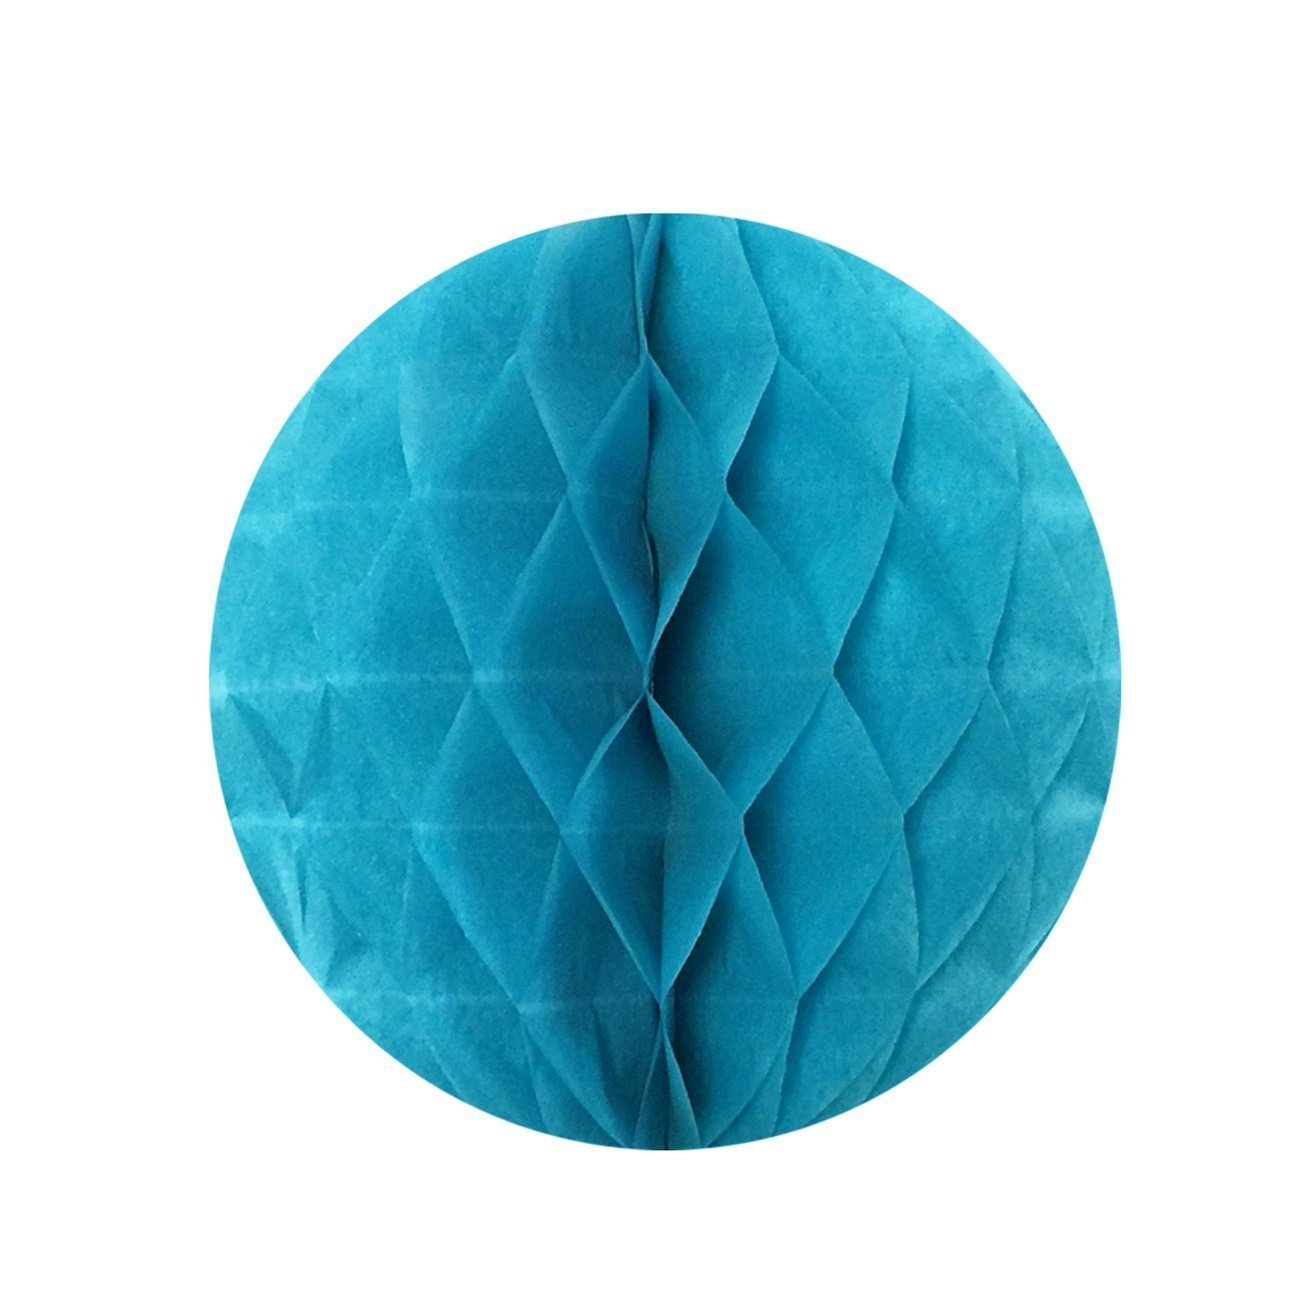 Wrapables Set of 21 Tissue Honeycomb Ball and Pom Pom Party Decorations, Blue/ Light Blue/ Aqua/ White